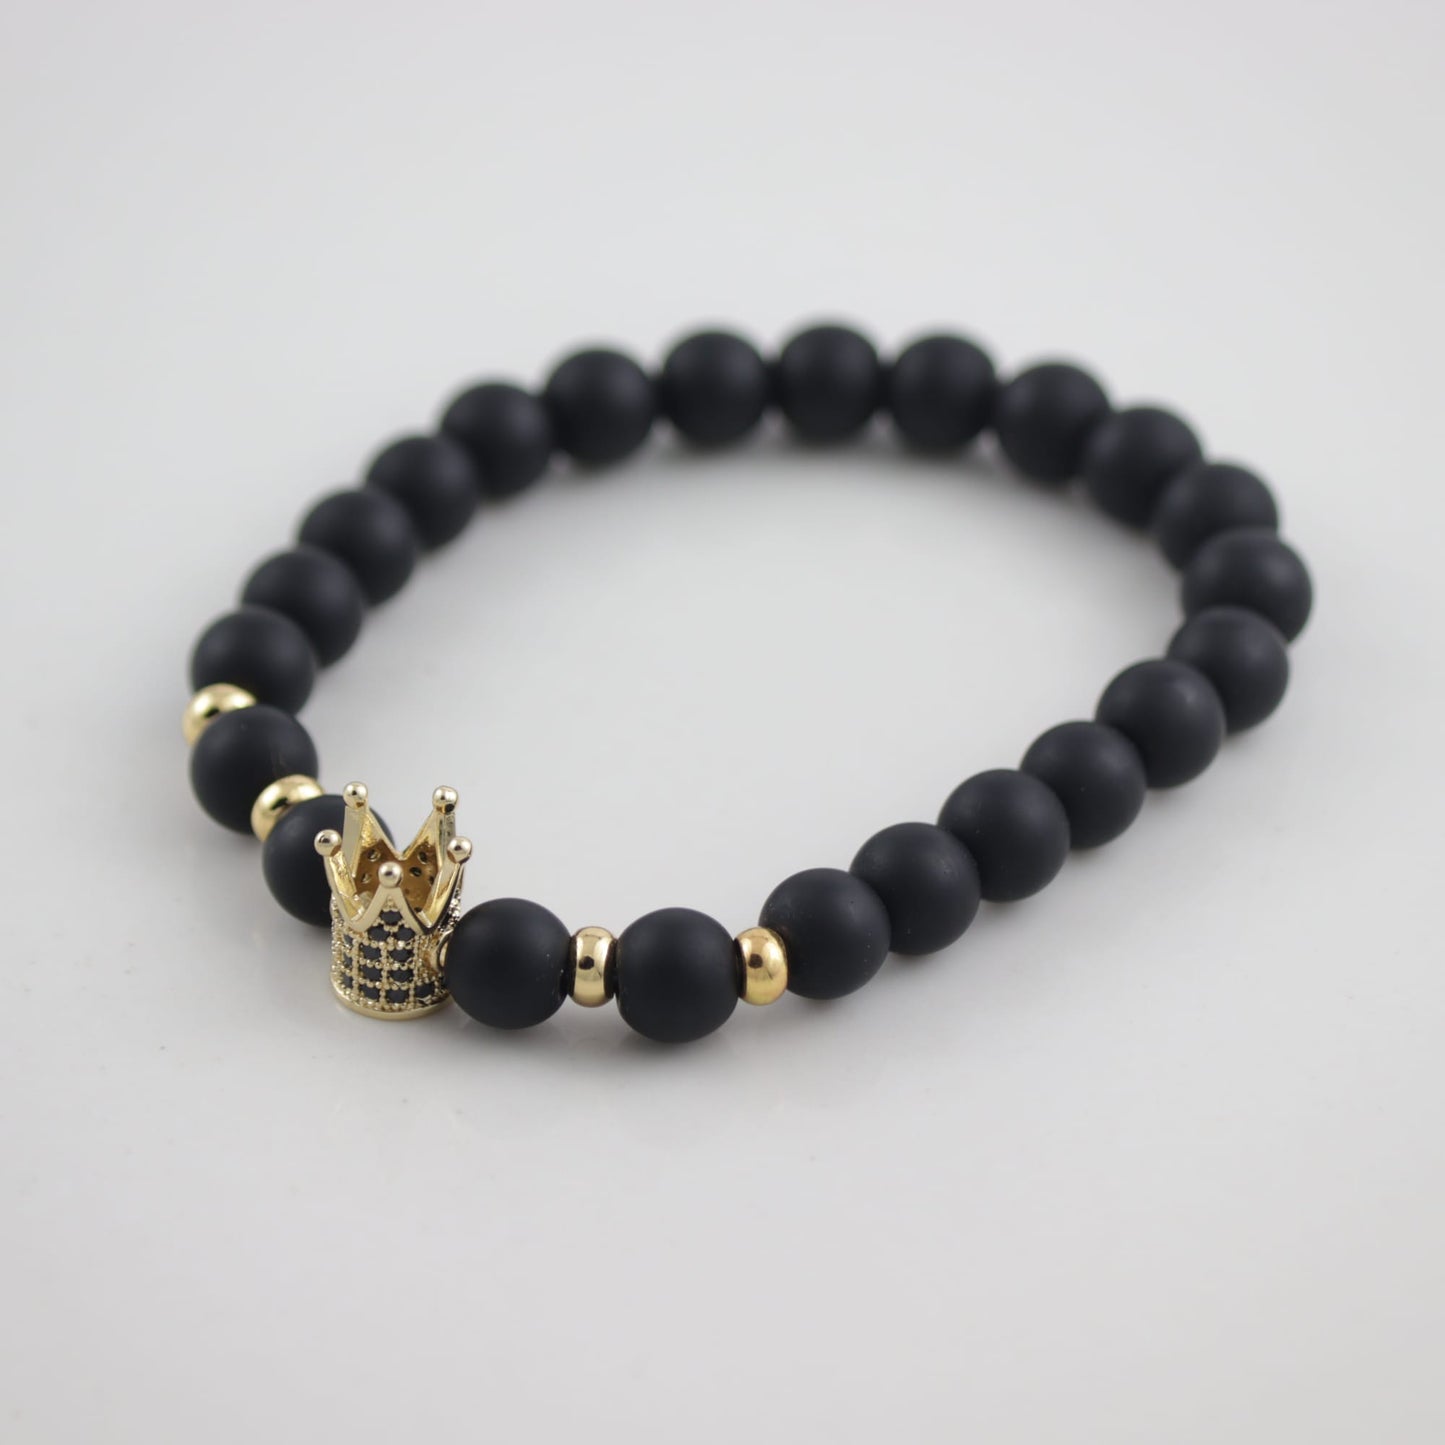 Black Adjustable Men's Bracelet with Golden Pieces